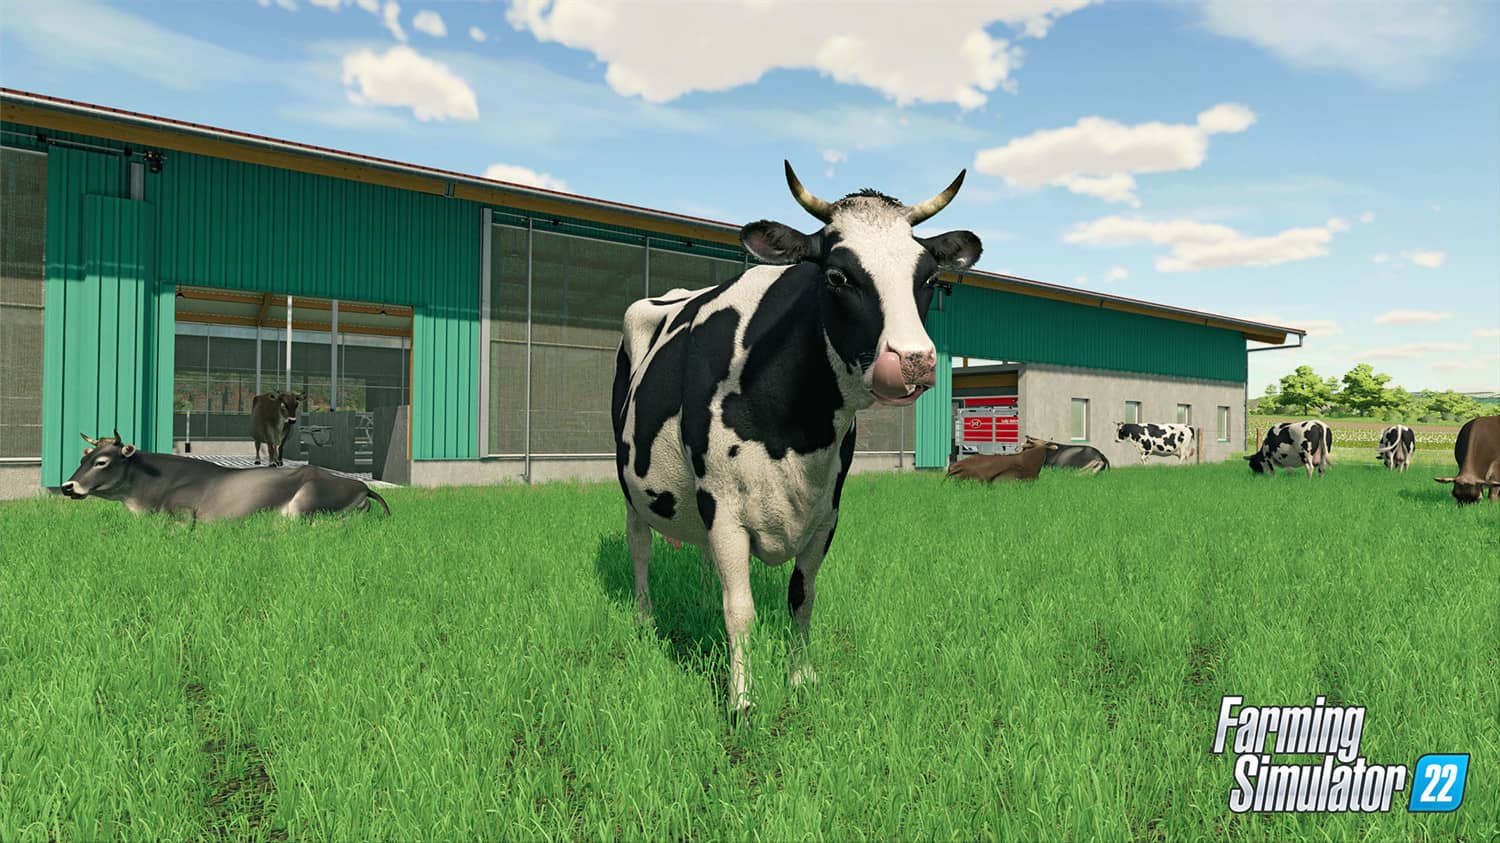 模拟农场22/Farming Simulator 22/支持网络联机 v1.13.1.1 集成DLCs 官方简体中文 23.4GB插图13